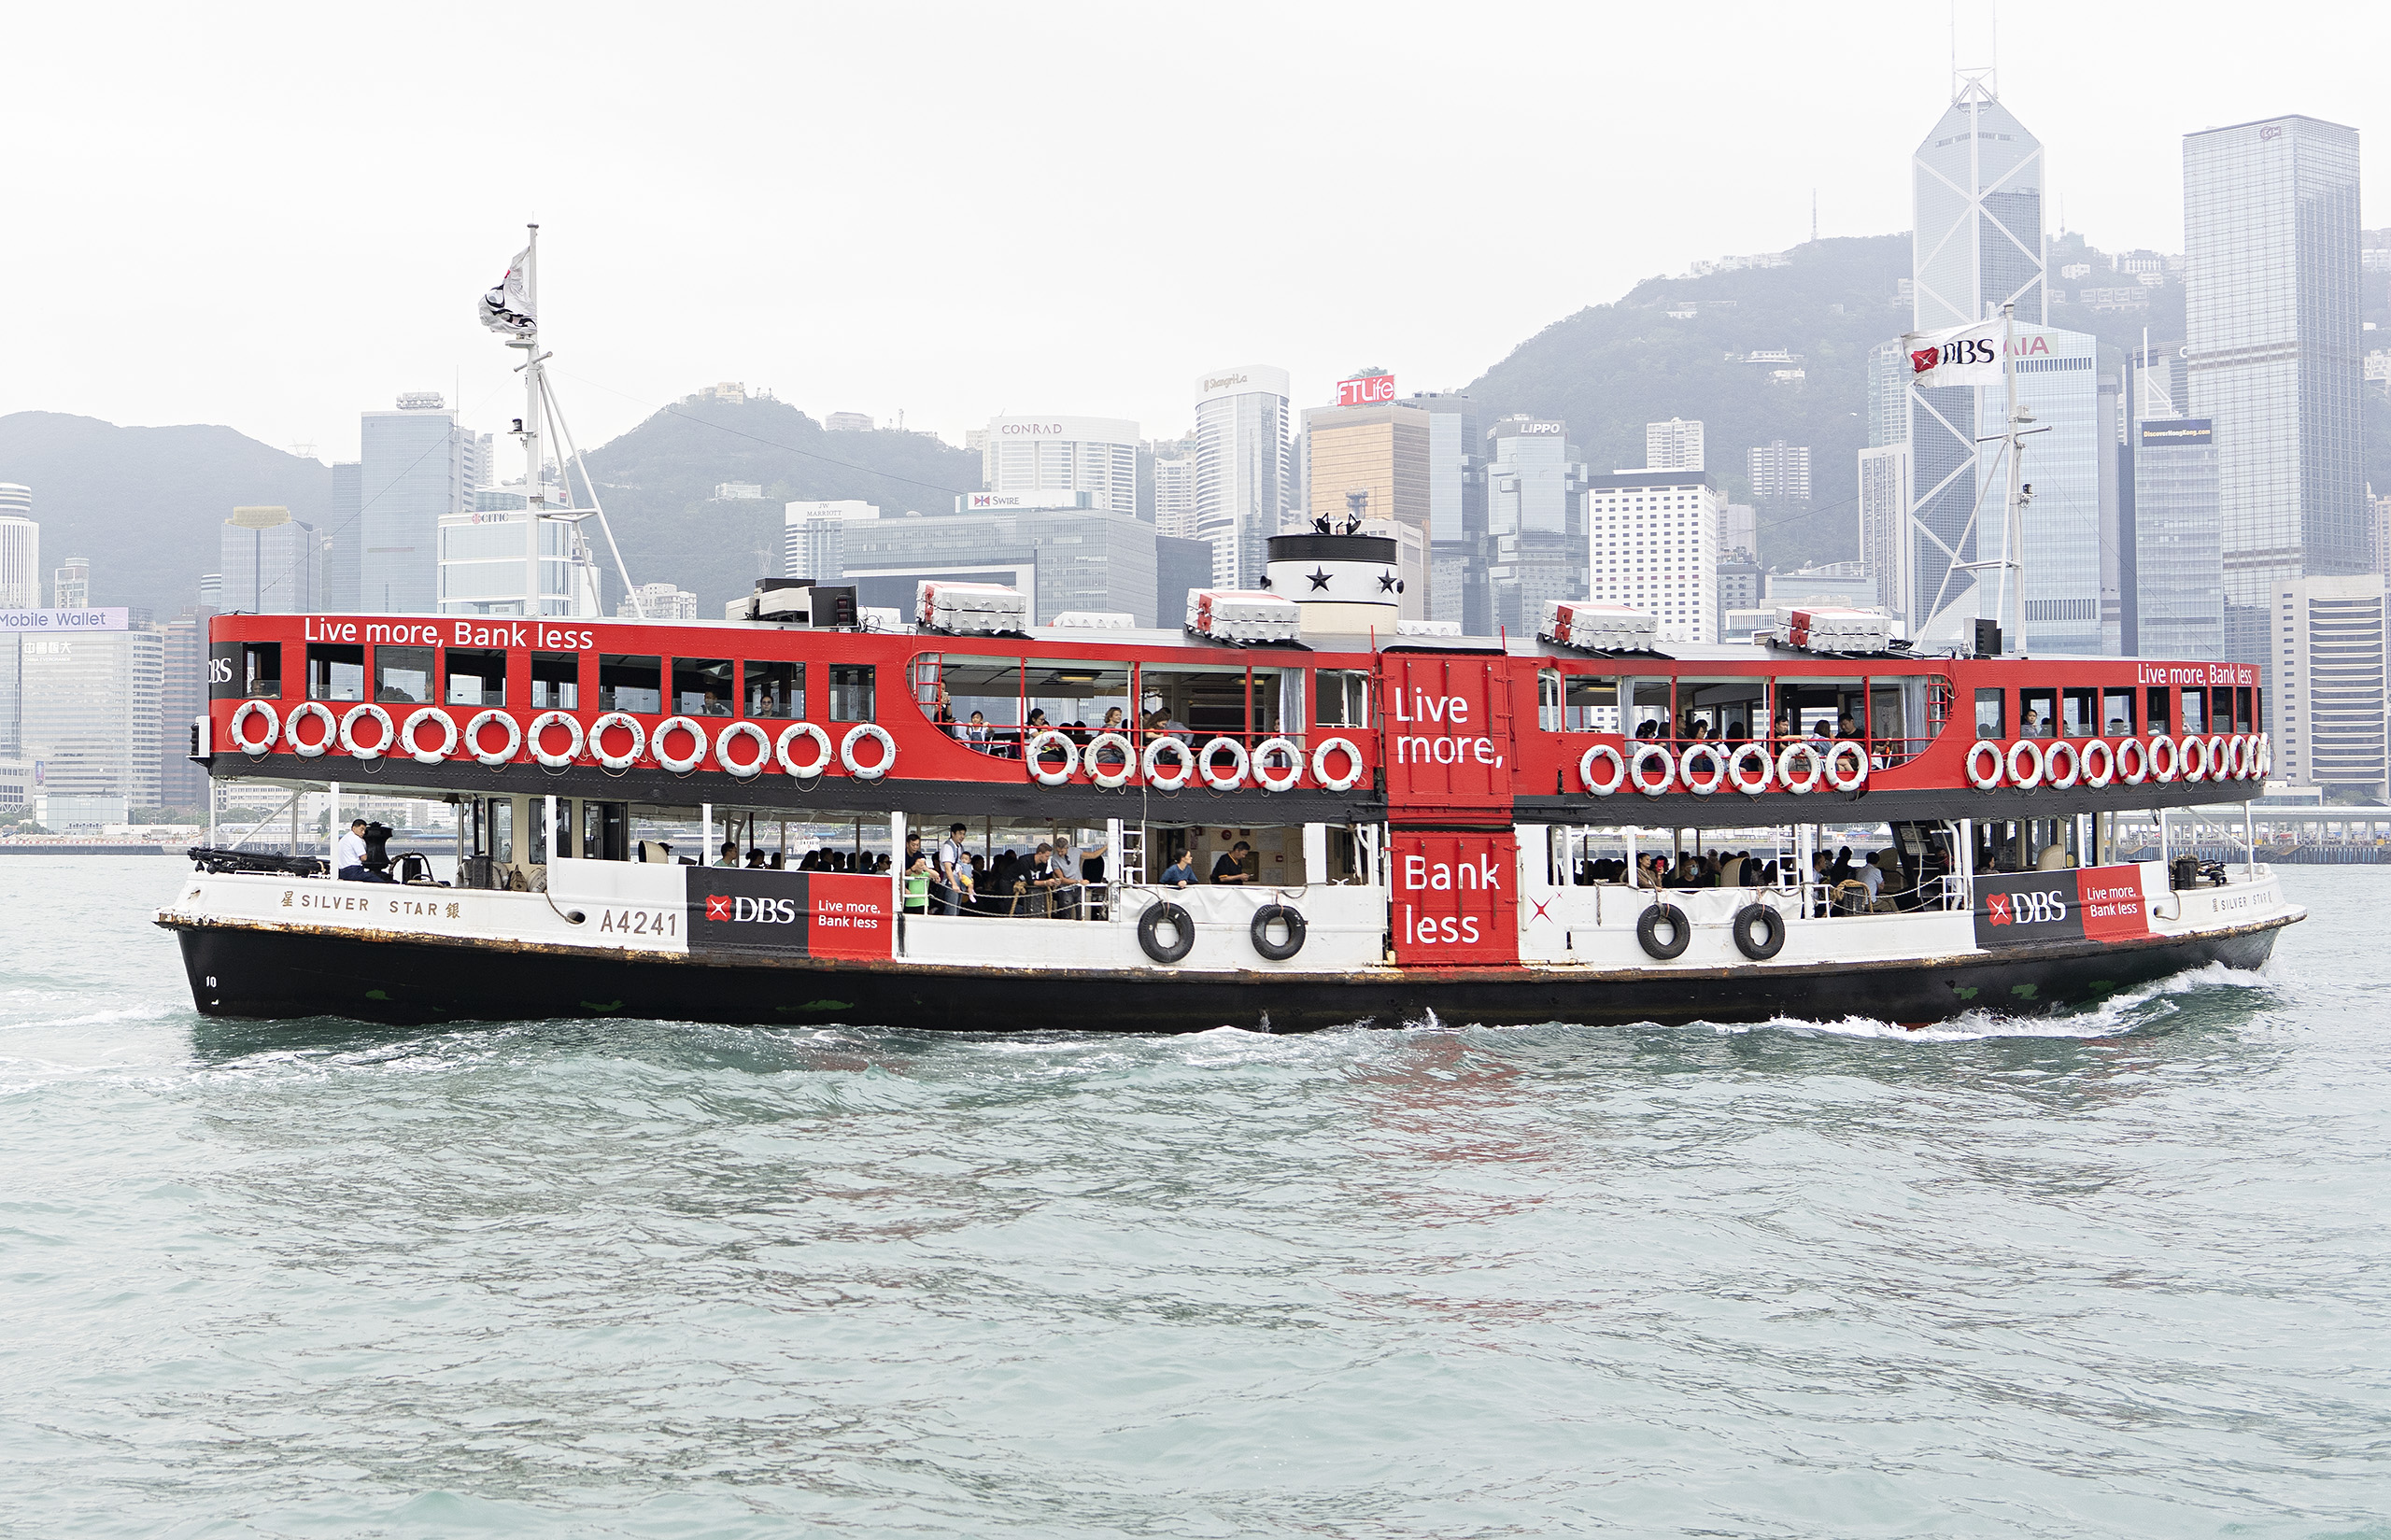 HK, Kowloon ferry